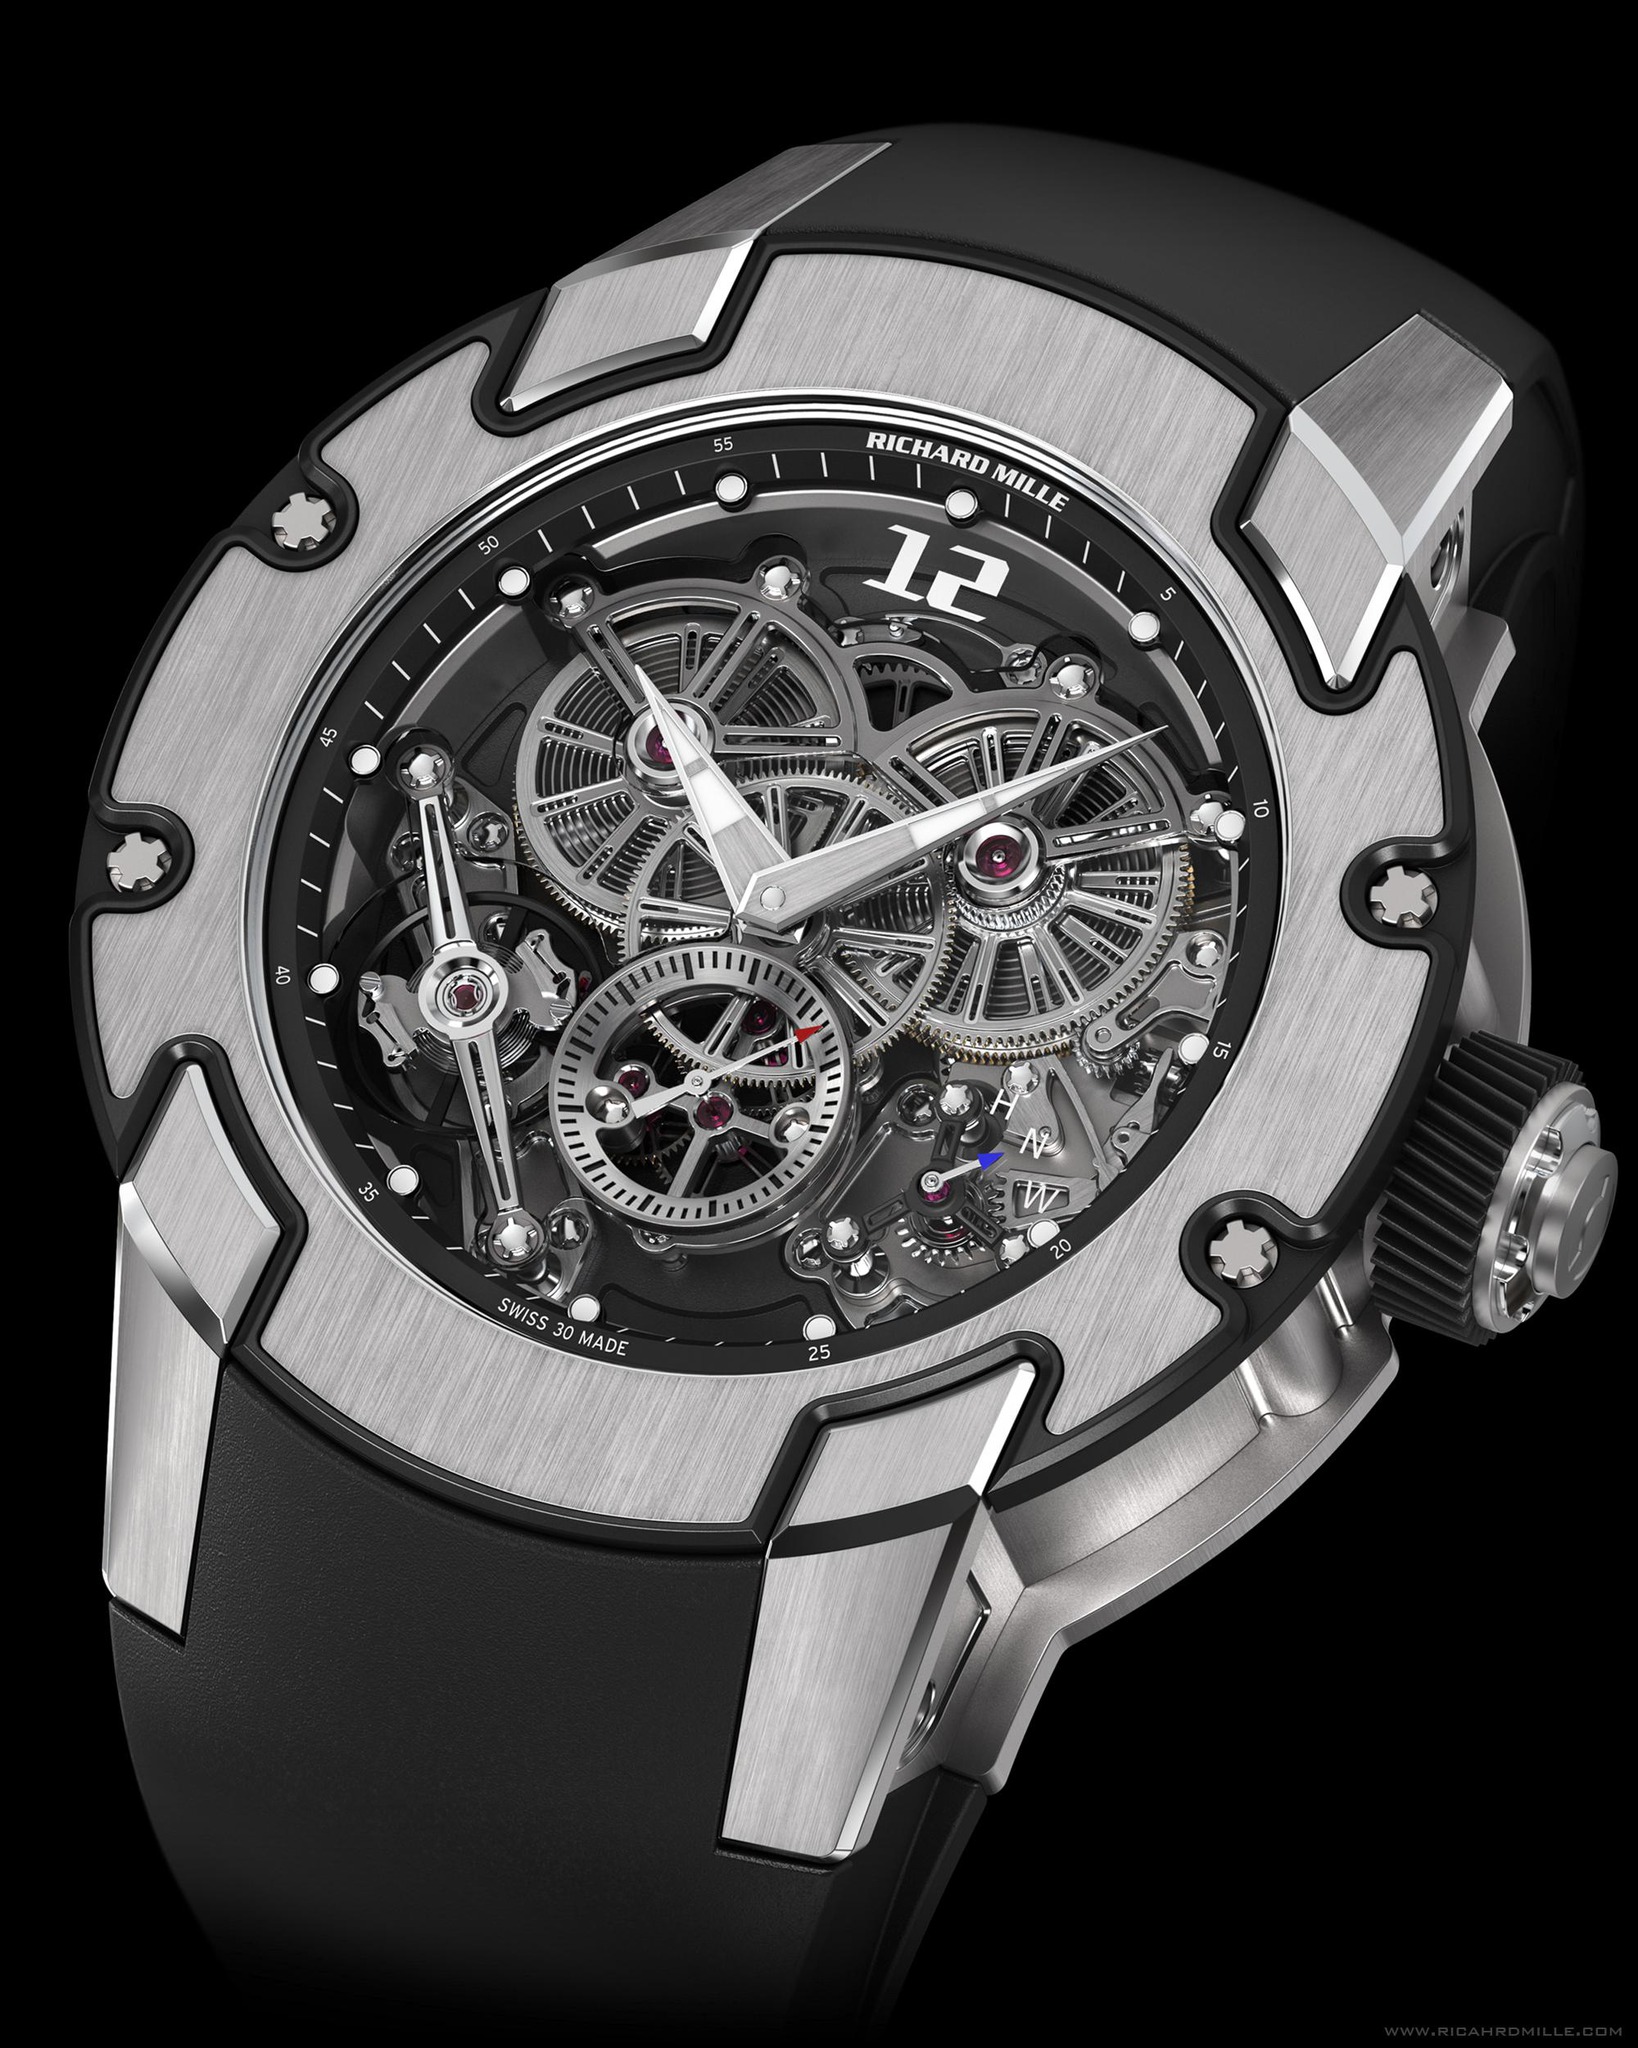 Replica Richard Mille RM 031 High Performance Titanium and Platinum Watch